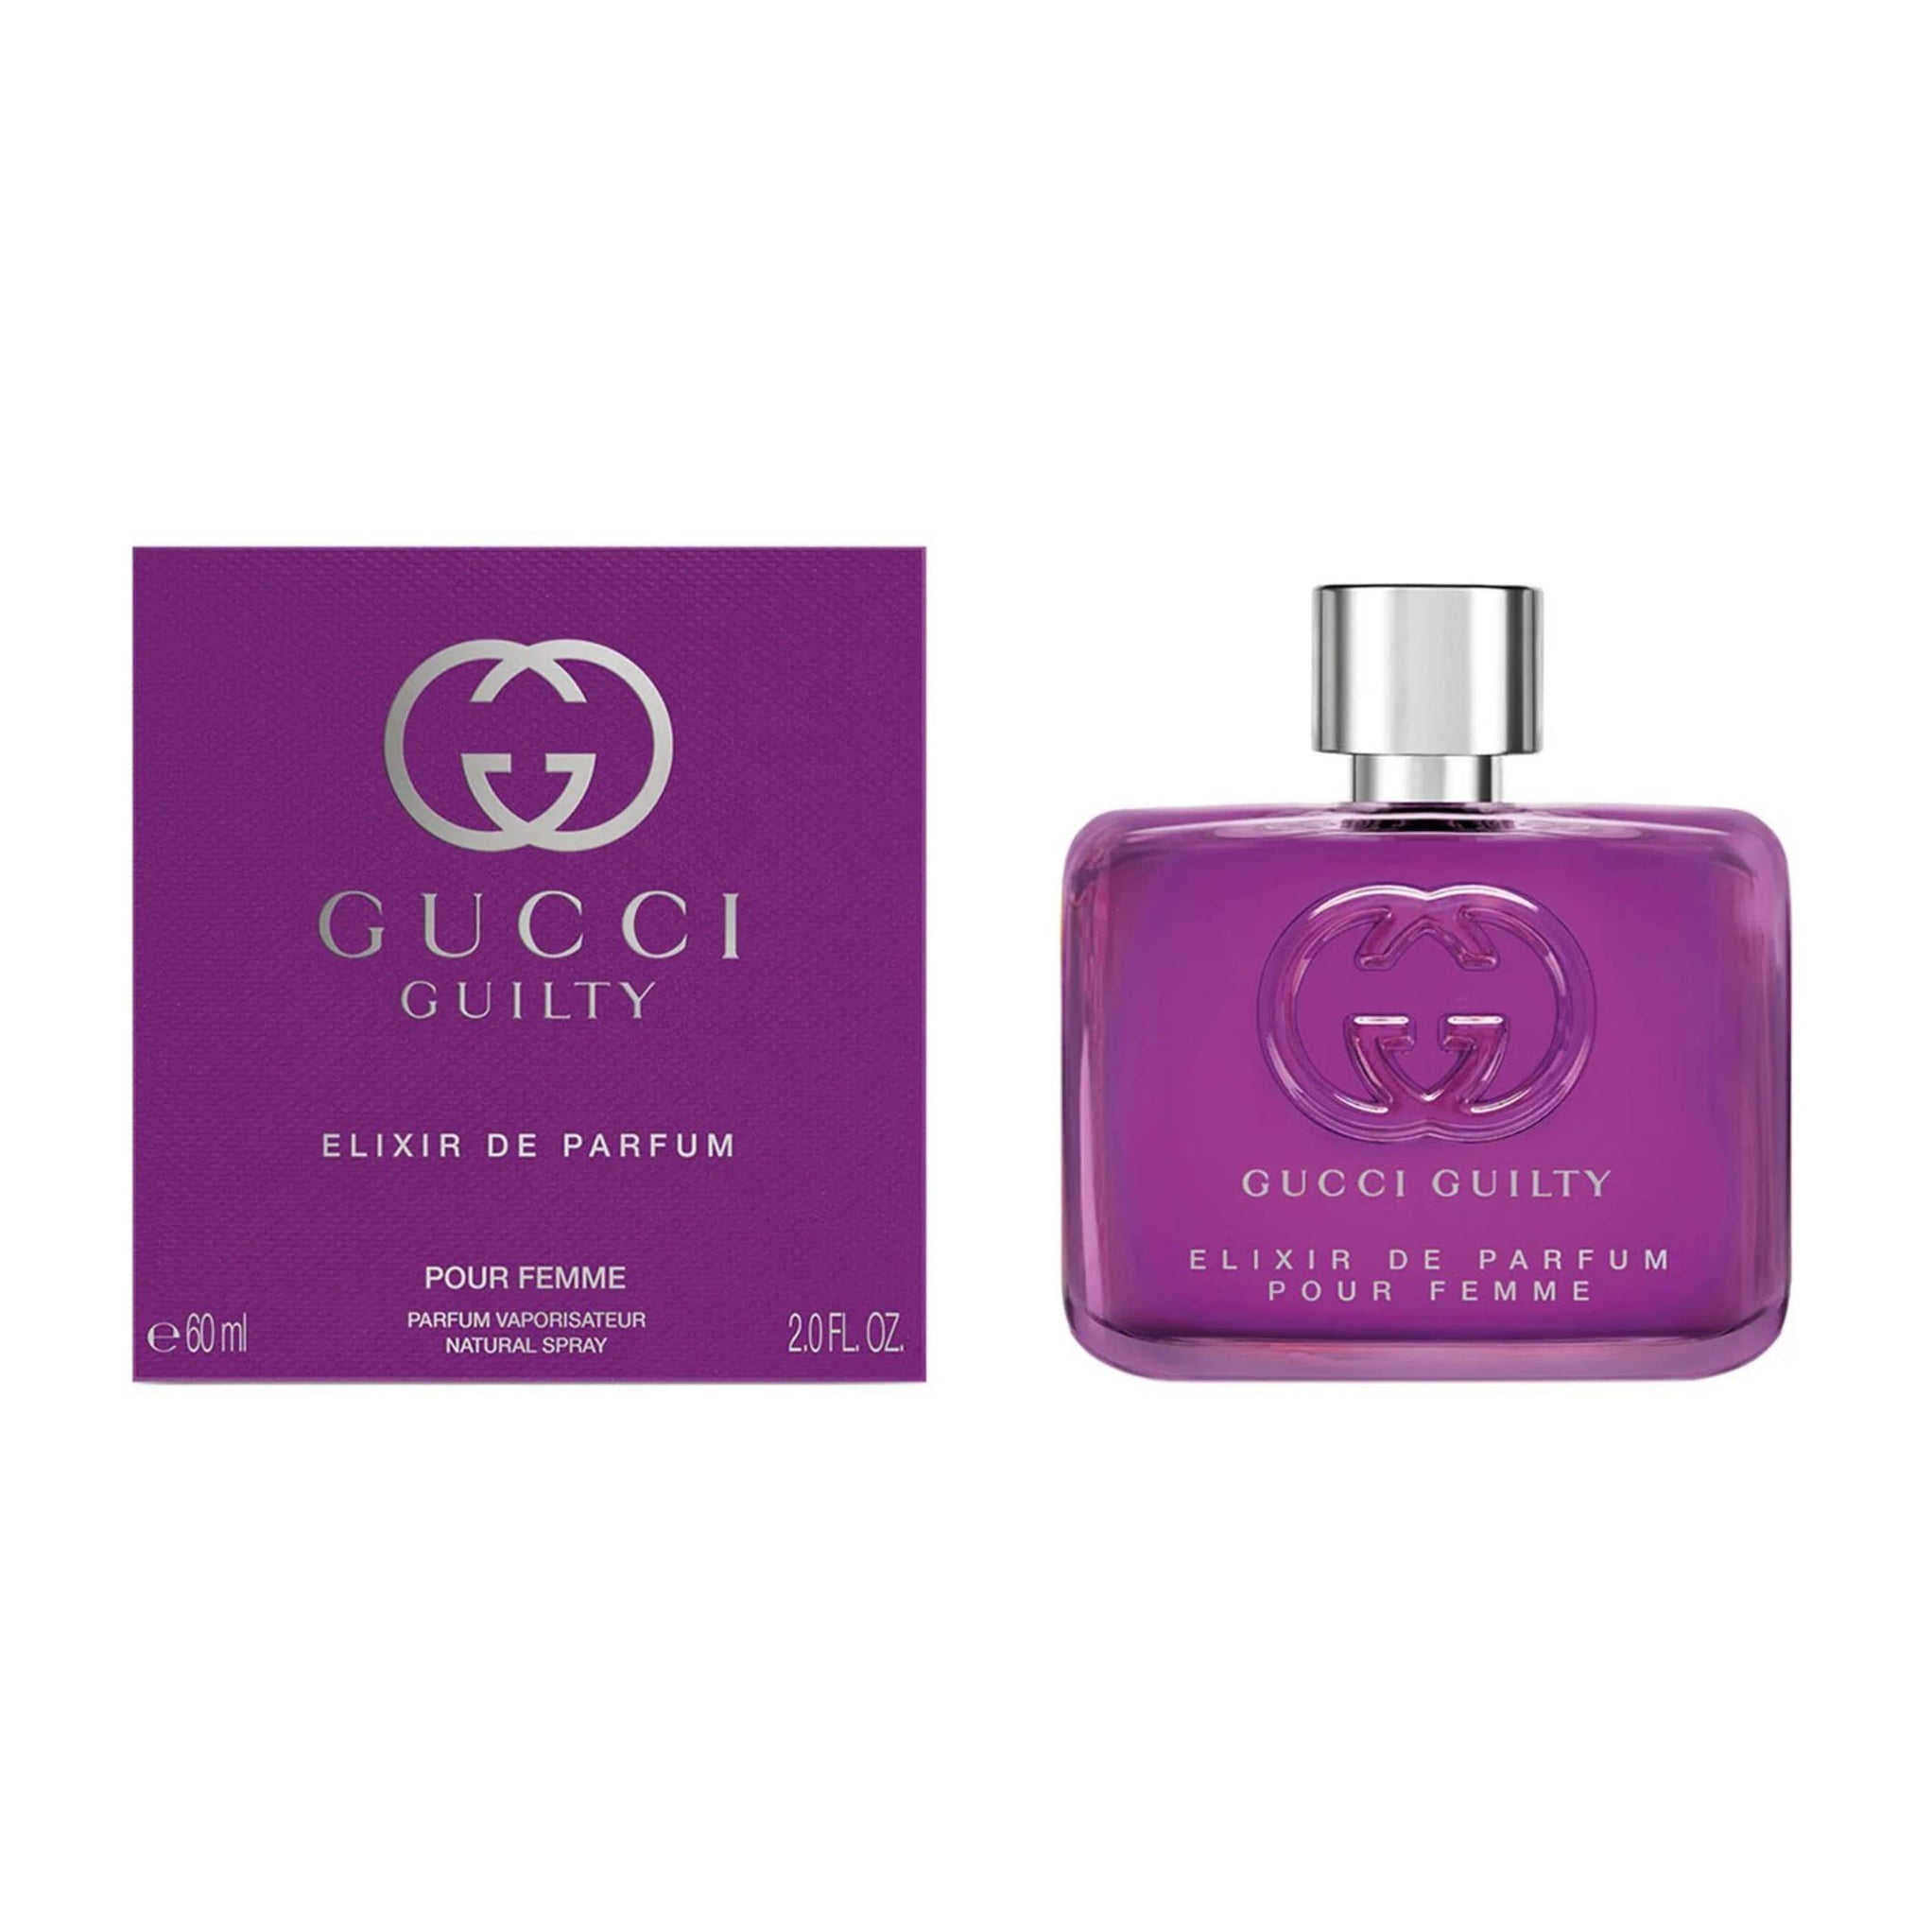 Gucci Guilty Elixir De Parfum For Women - 60ml - Bloom Pharmacy